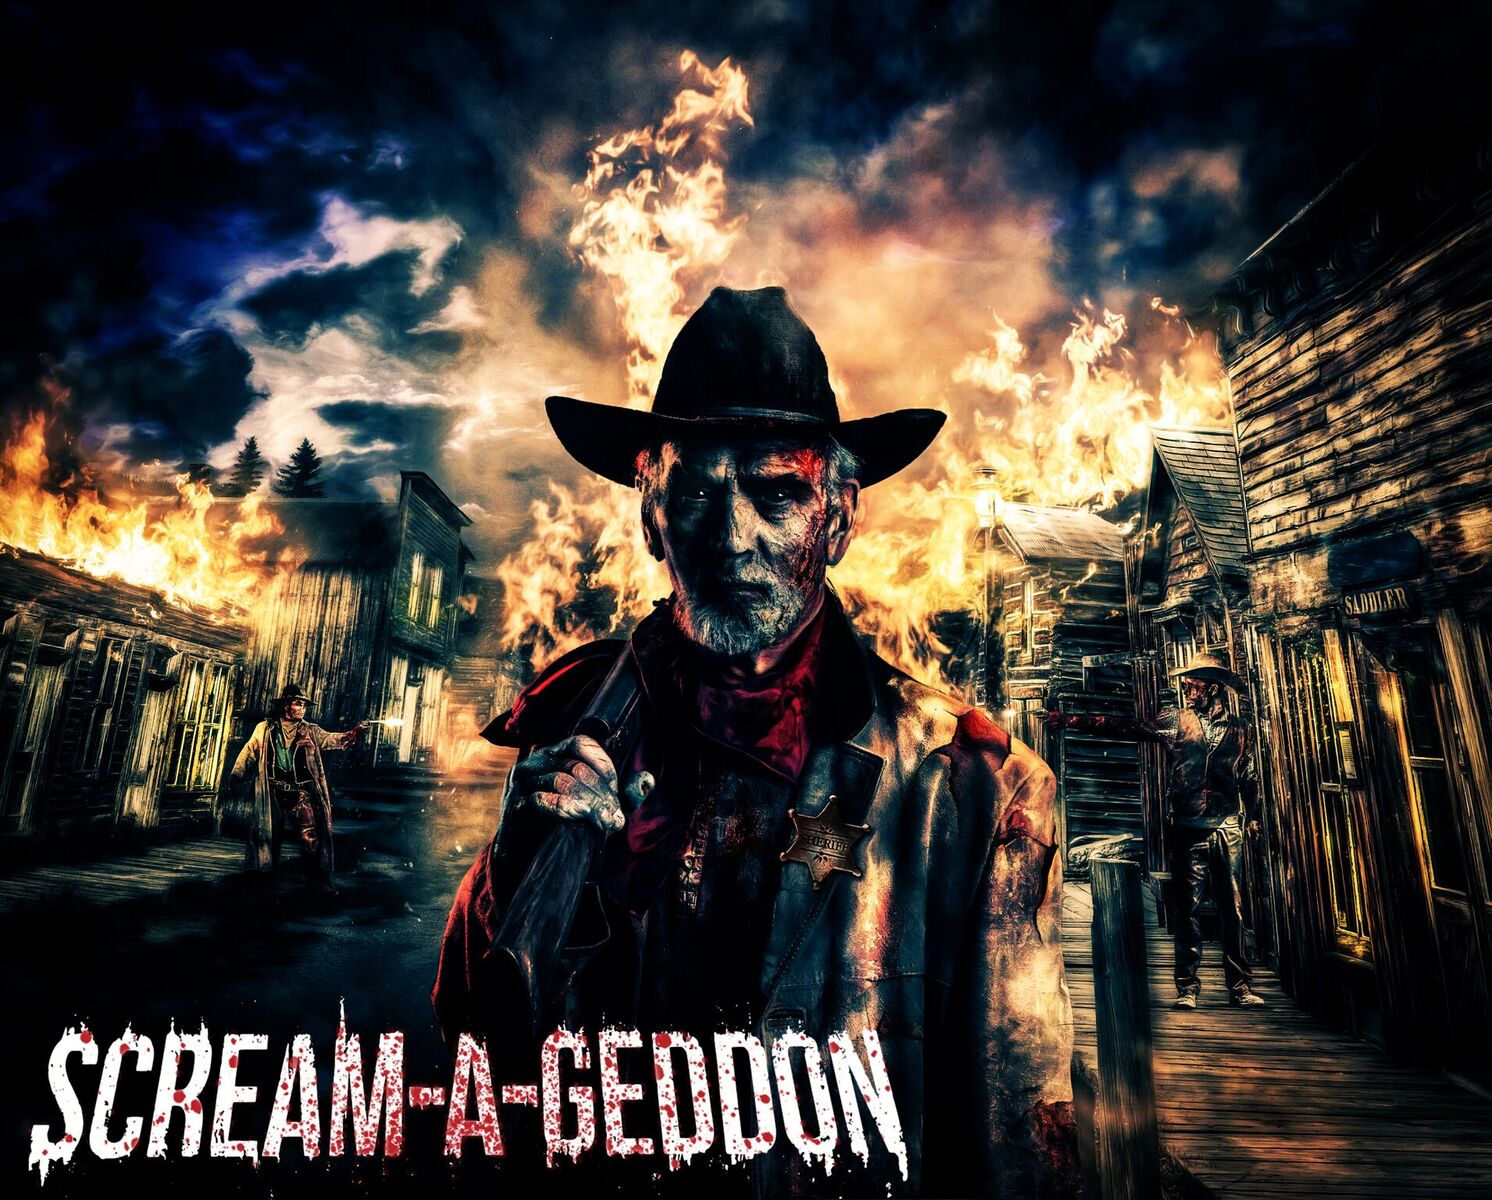 1. "Screamageddon promo code" - wide 8